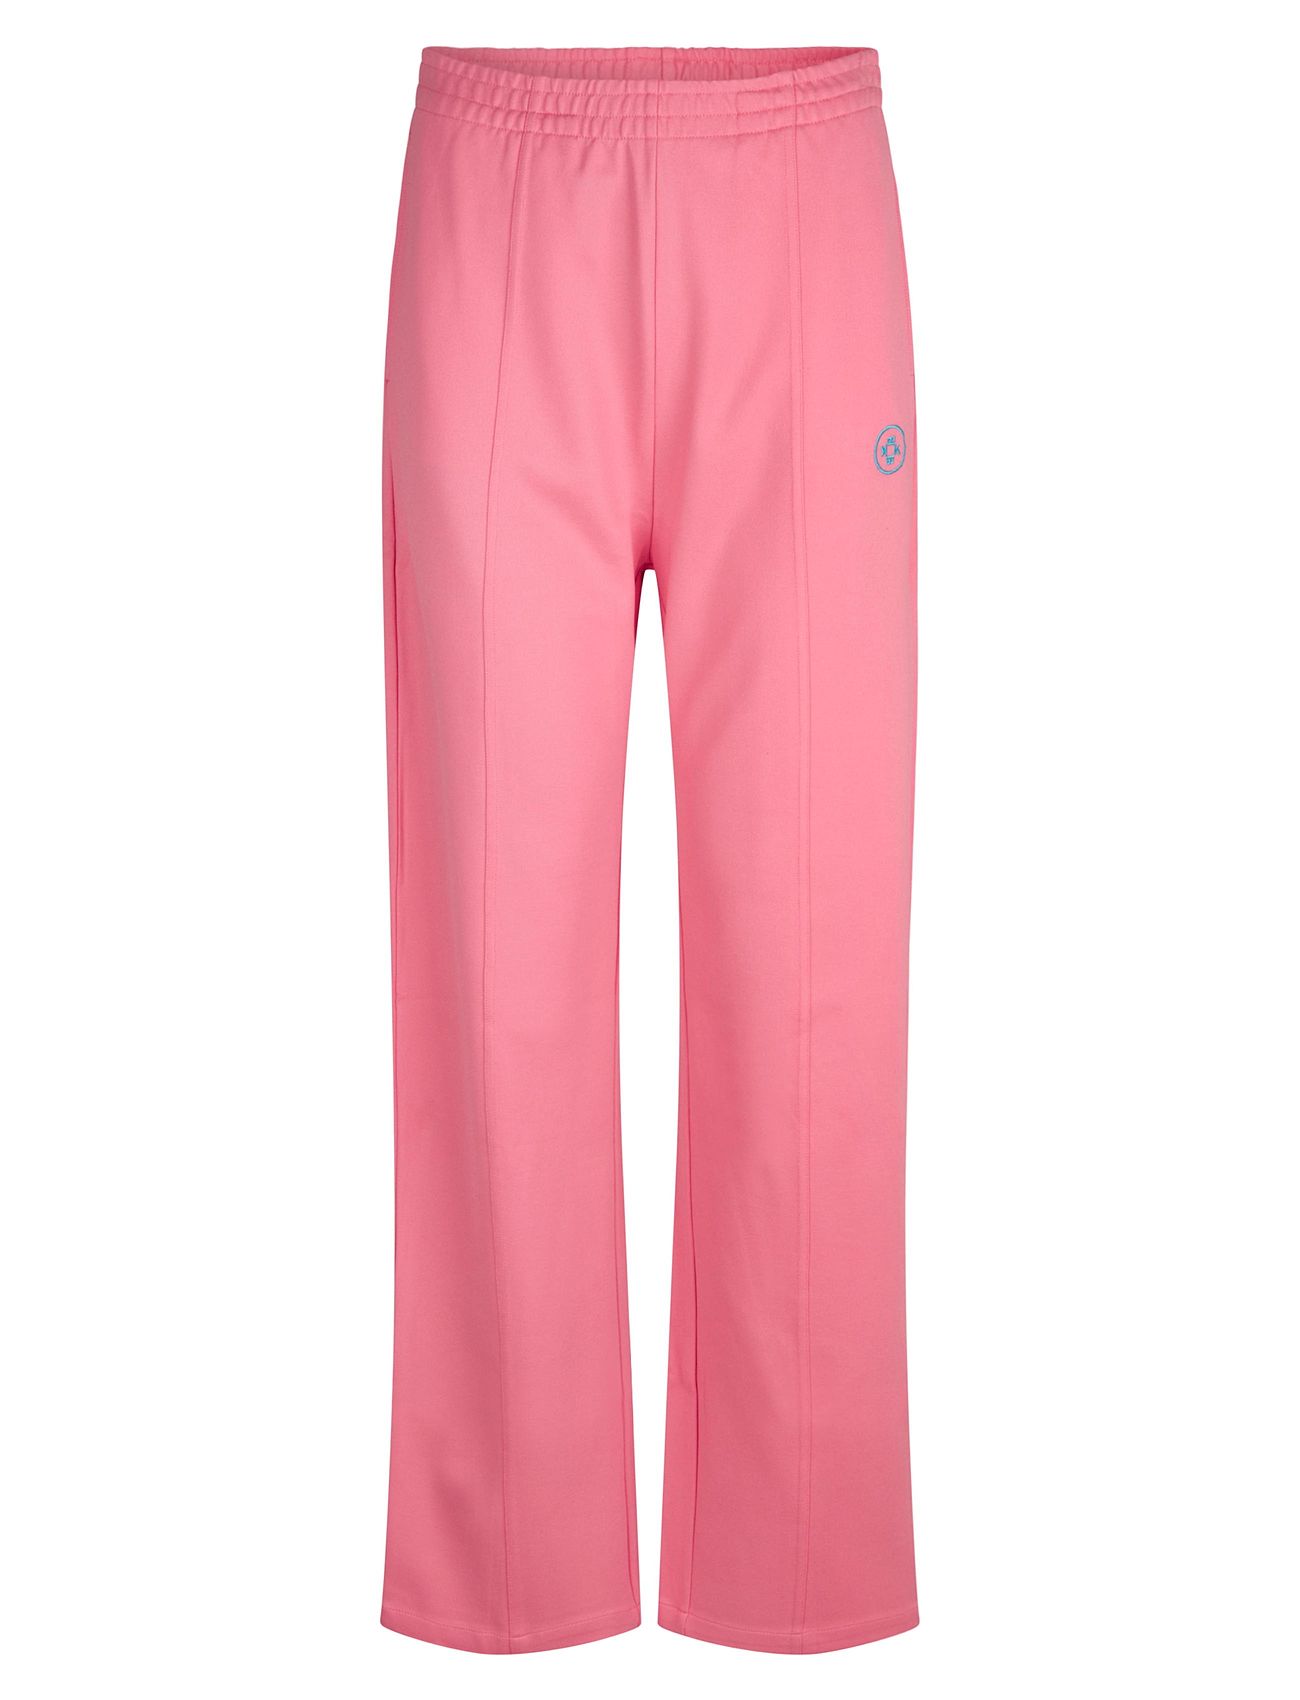 Trousers Bottoms Trousers Joggers Pink Barbara Kristoffersen By Rosemunde